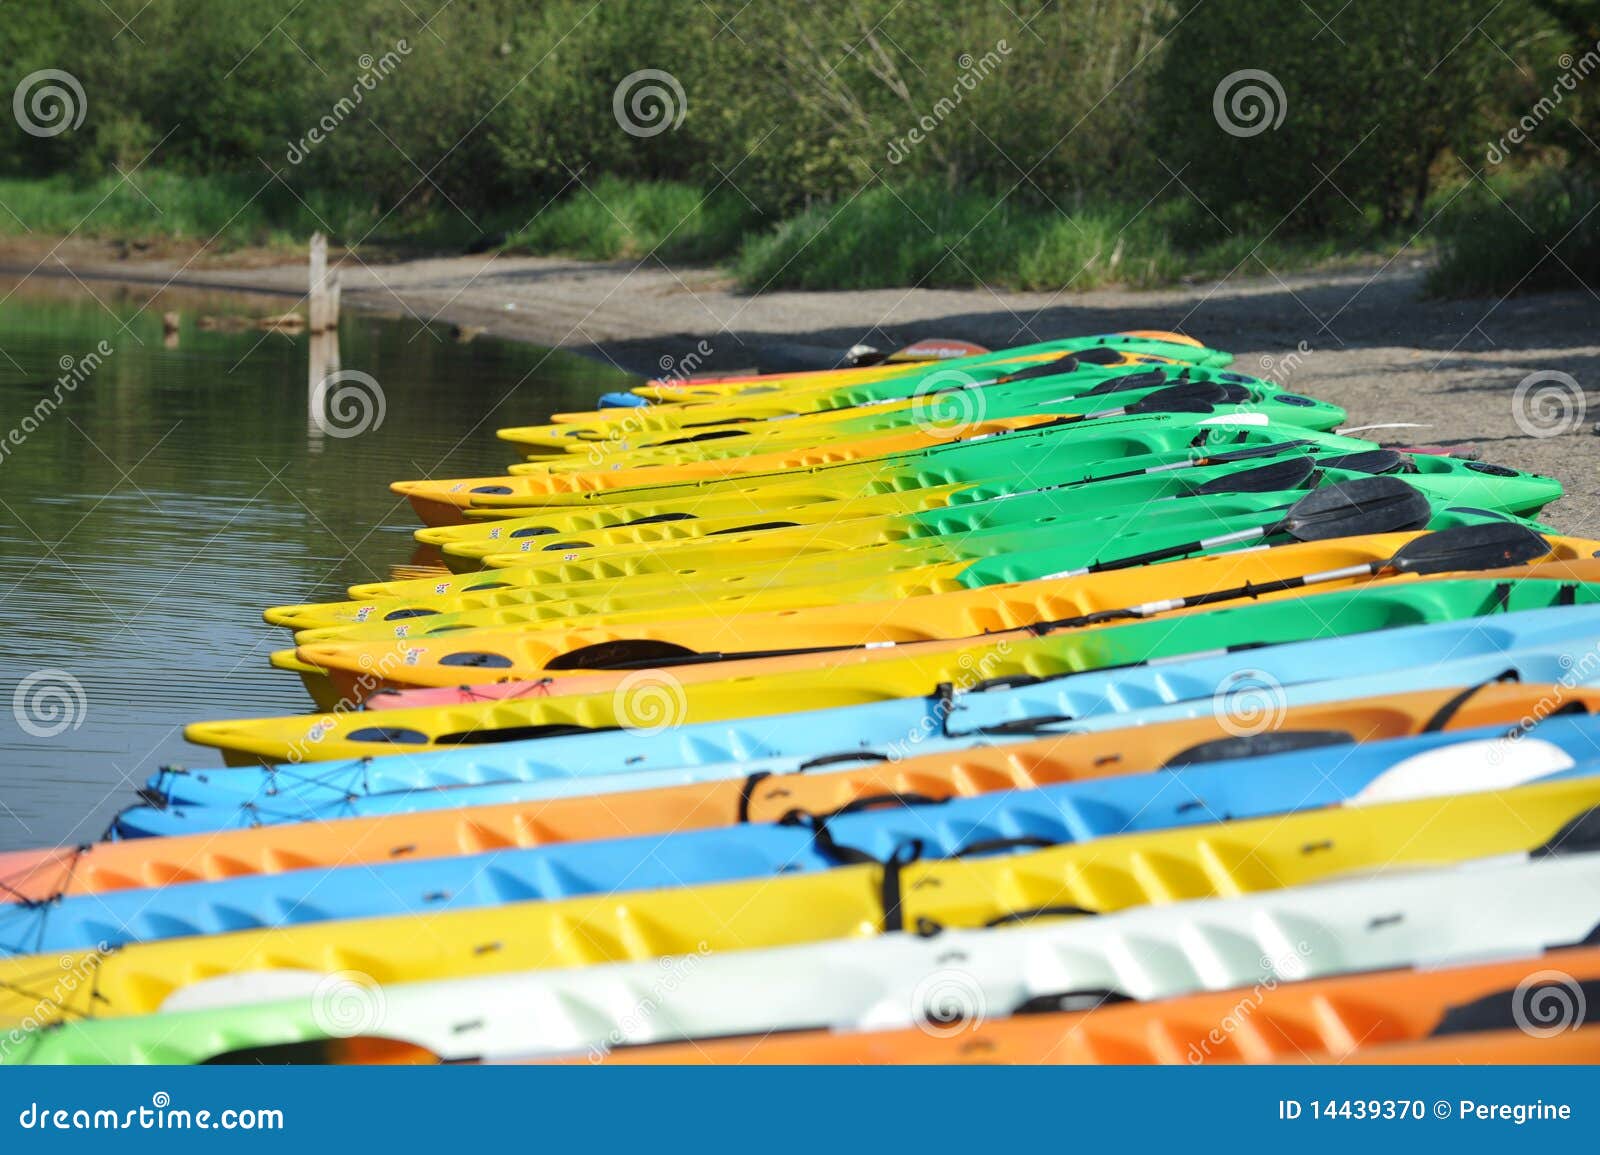 Canoe On The Beach Stock Photo - Image: 14439370